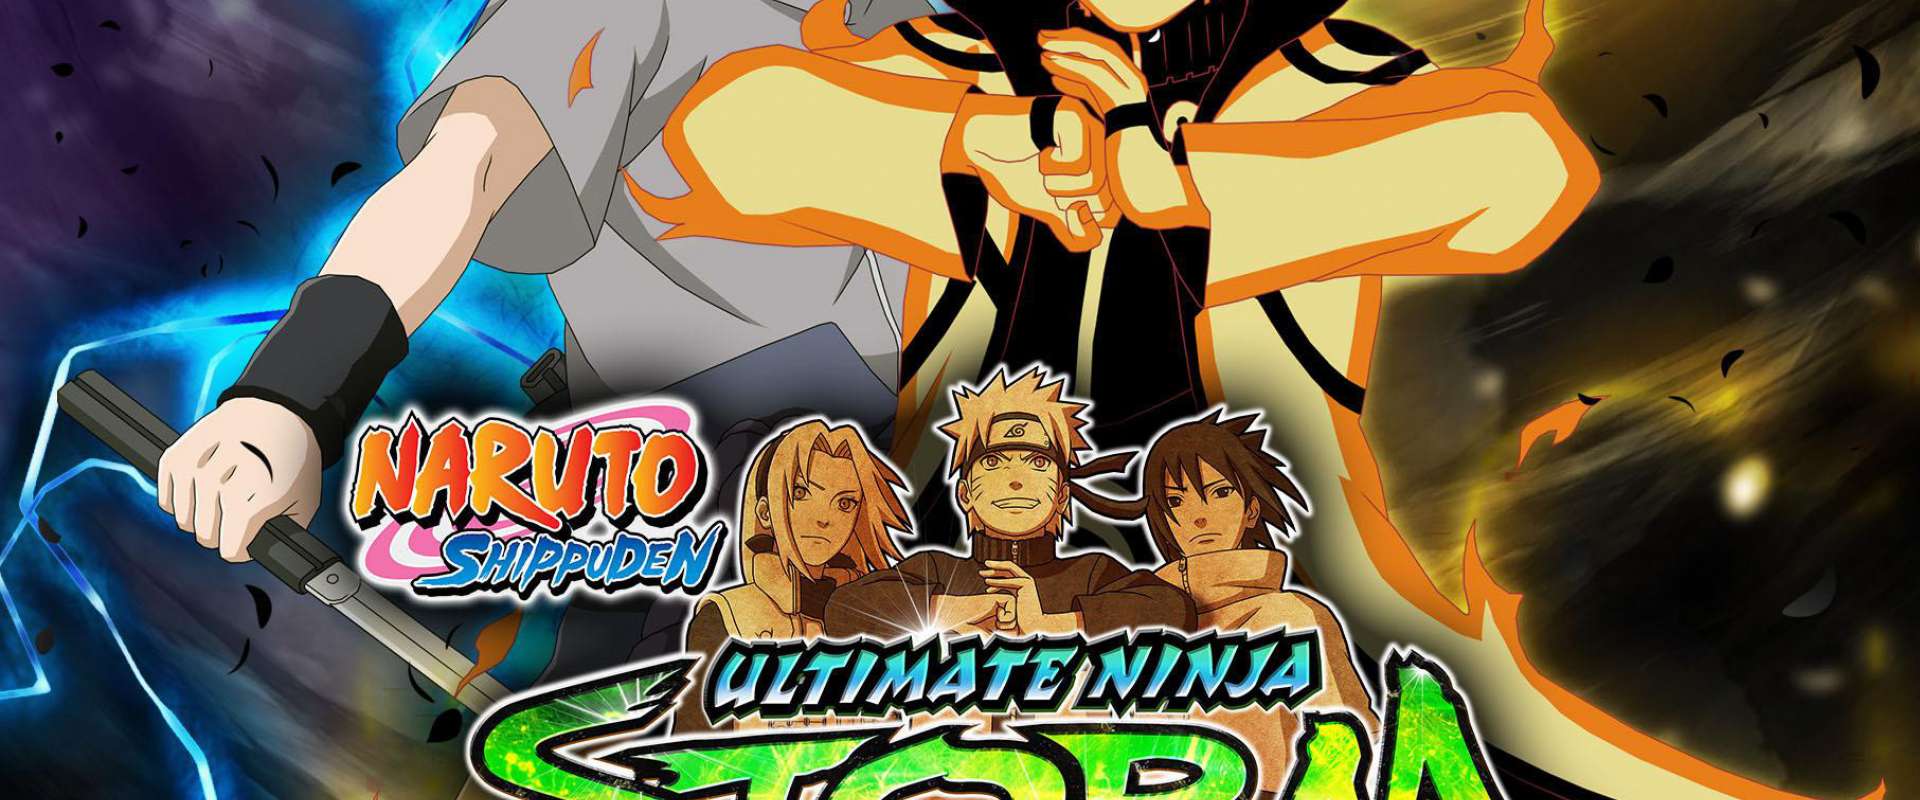 Naruto Shippuden Ultimate Ninja Storm 4 (Temporada 16) - Gameplay 